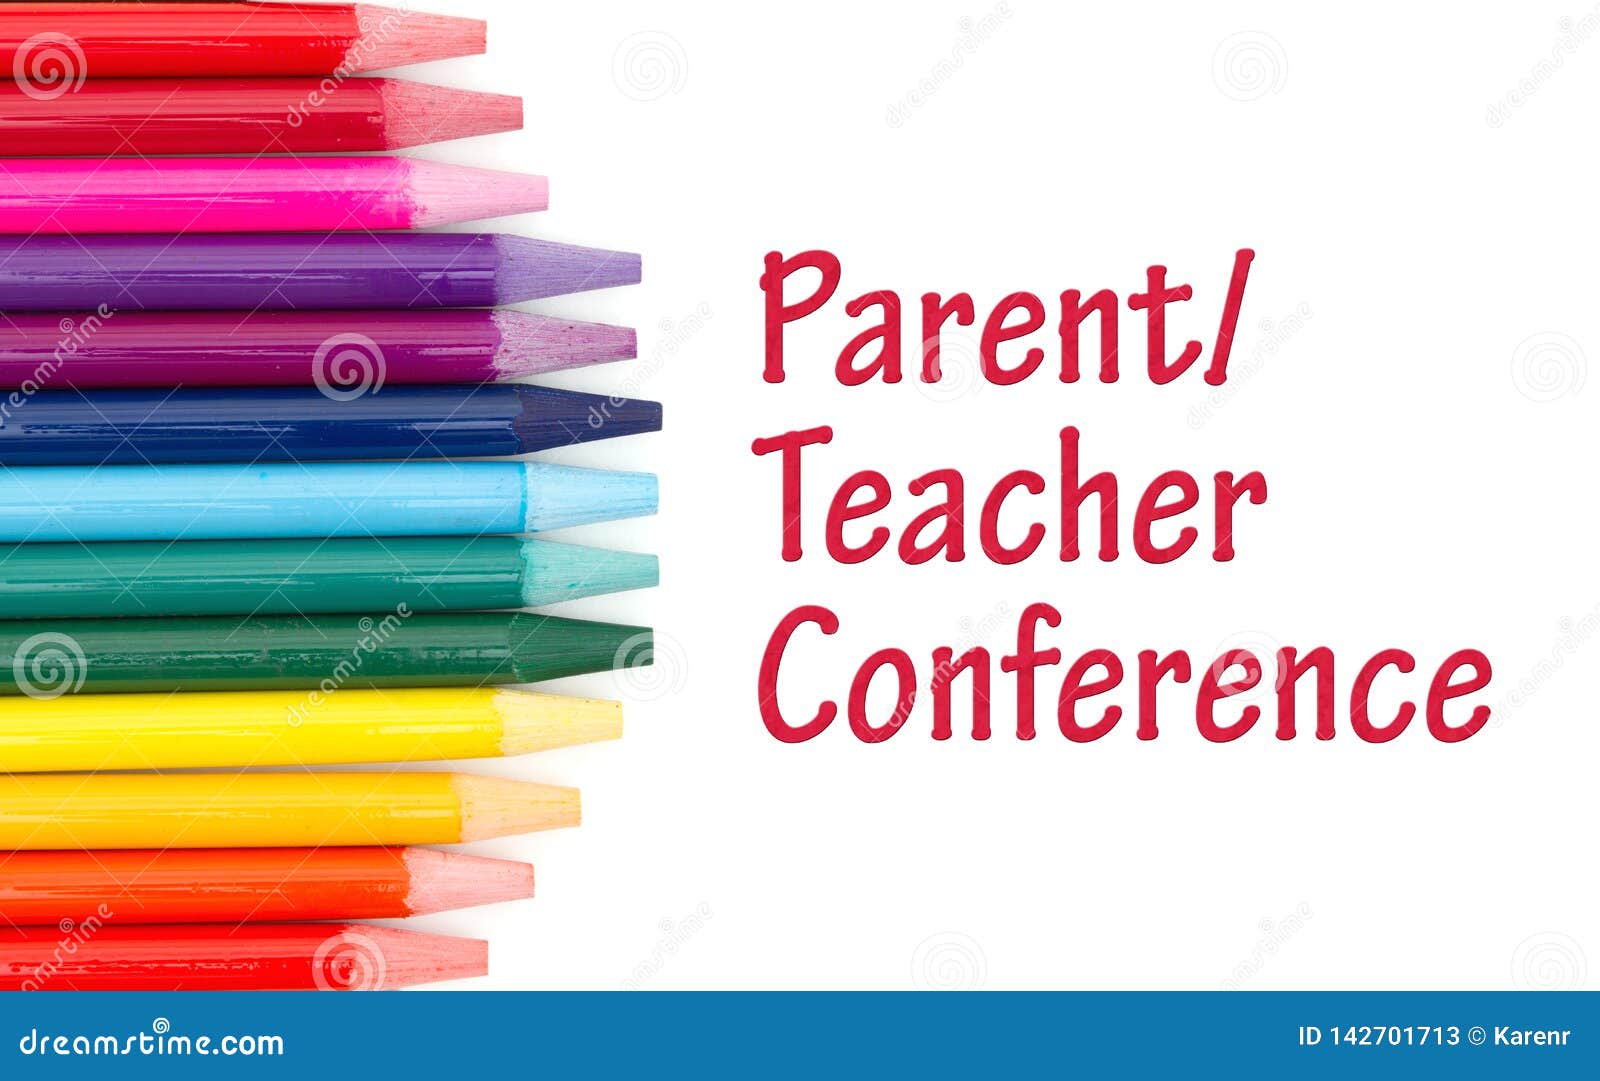 parent teacher conference message with colored watercolor pencils